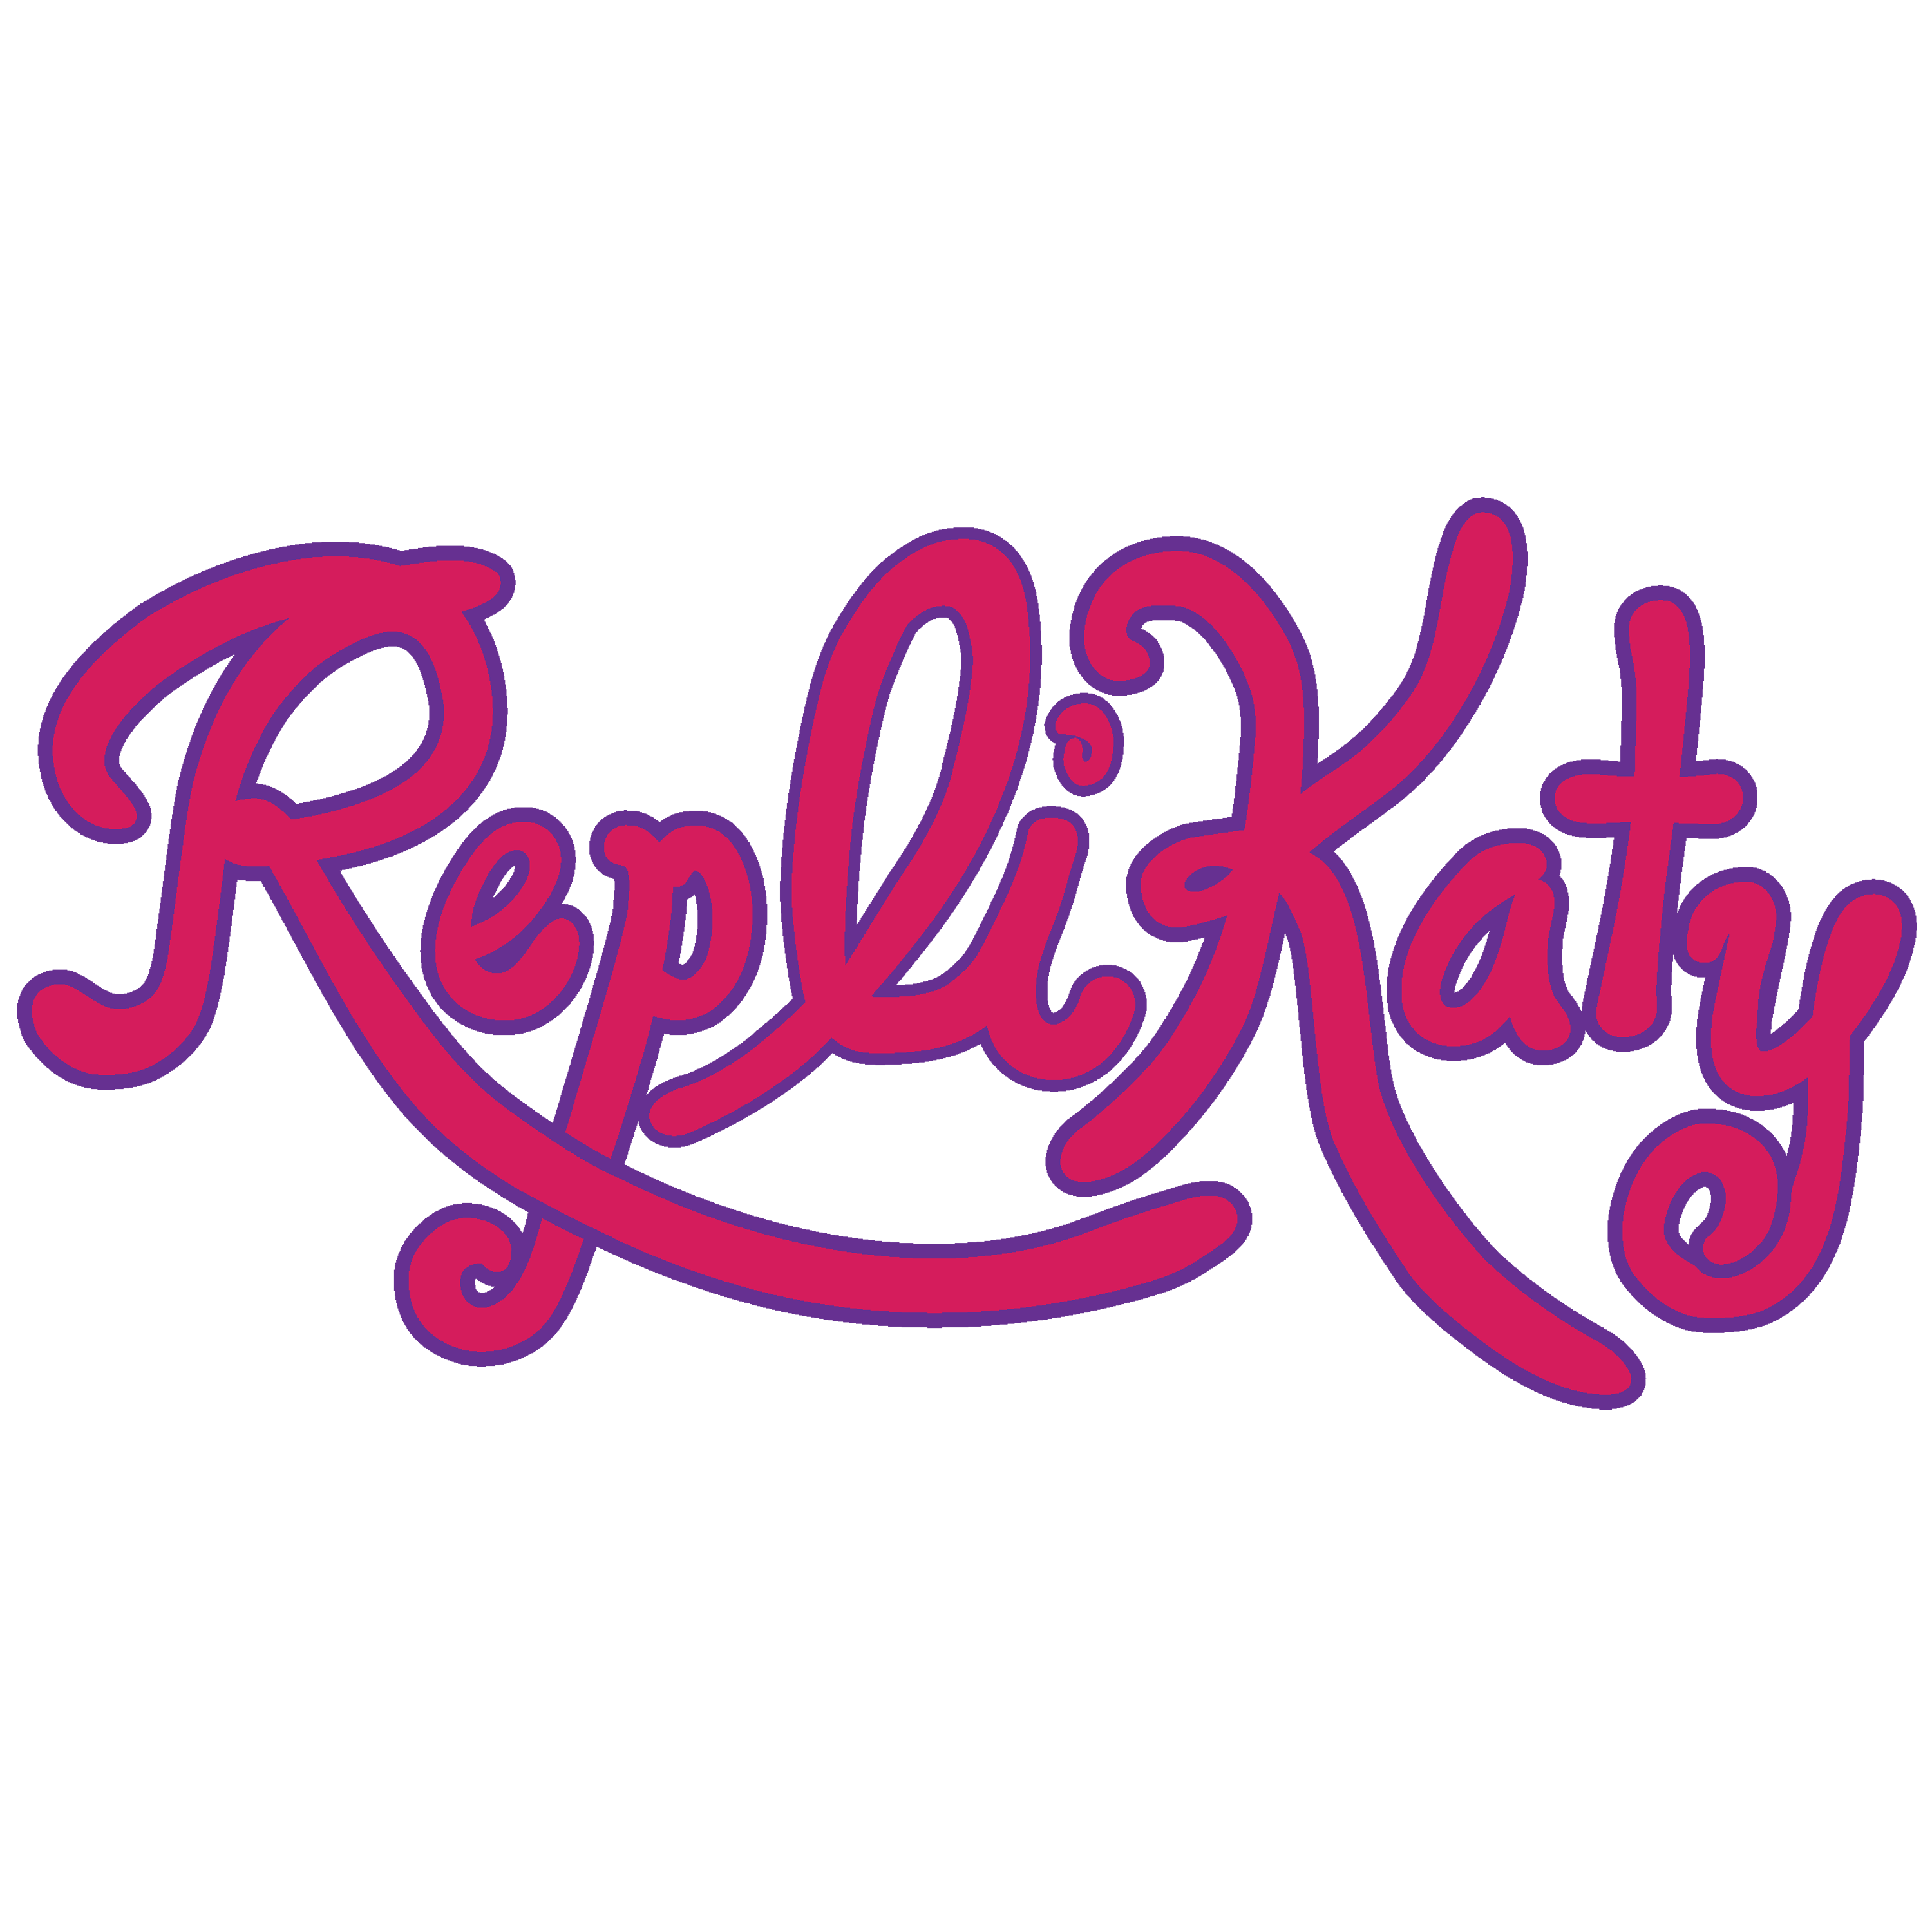 RepliKaty - The Katy Perry Tribute